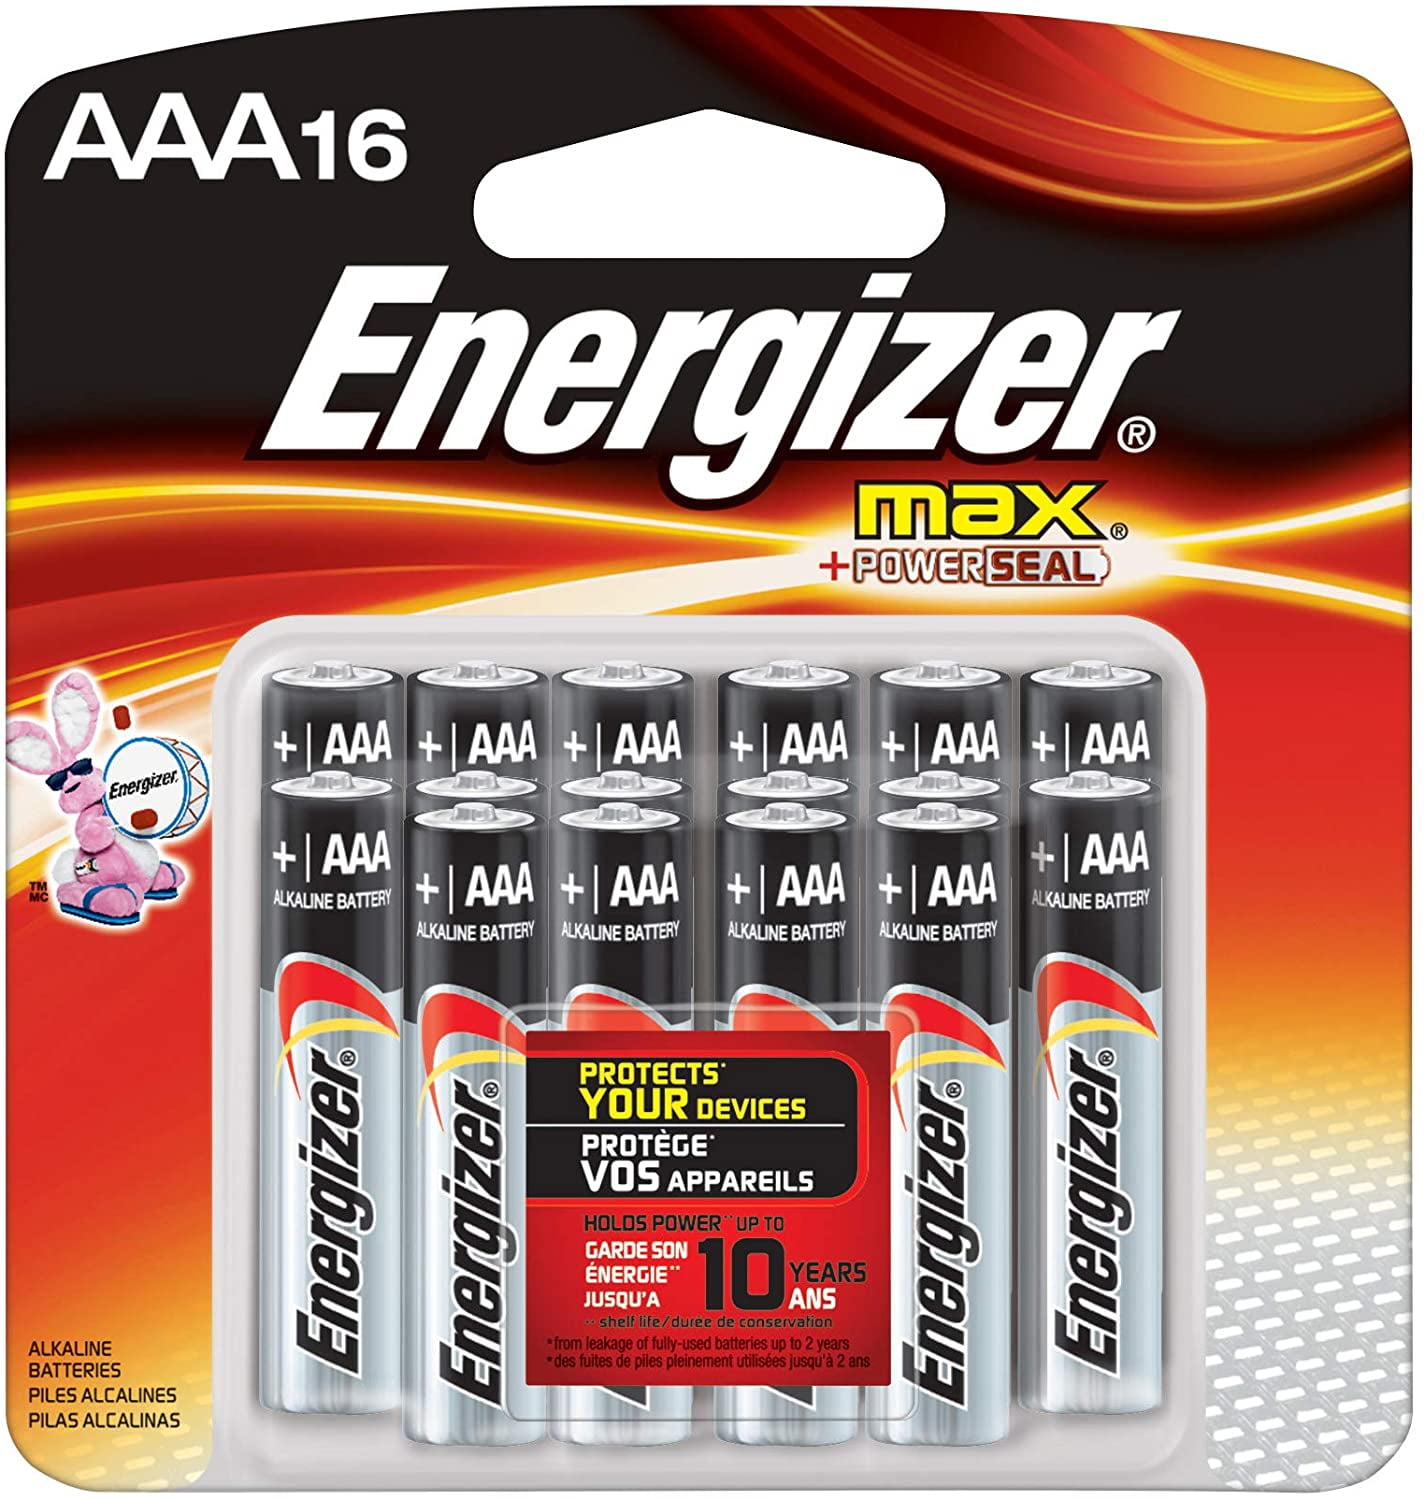 Energizer Alkaline MAX AAA Batteries - Shop Batteries at H-E-B